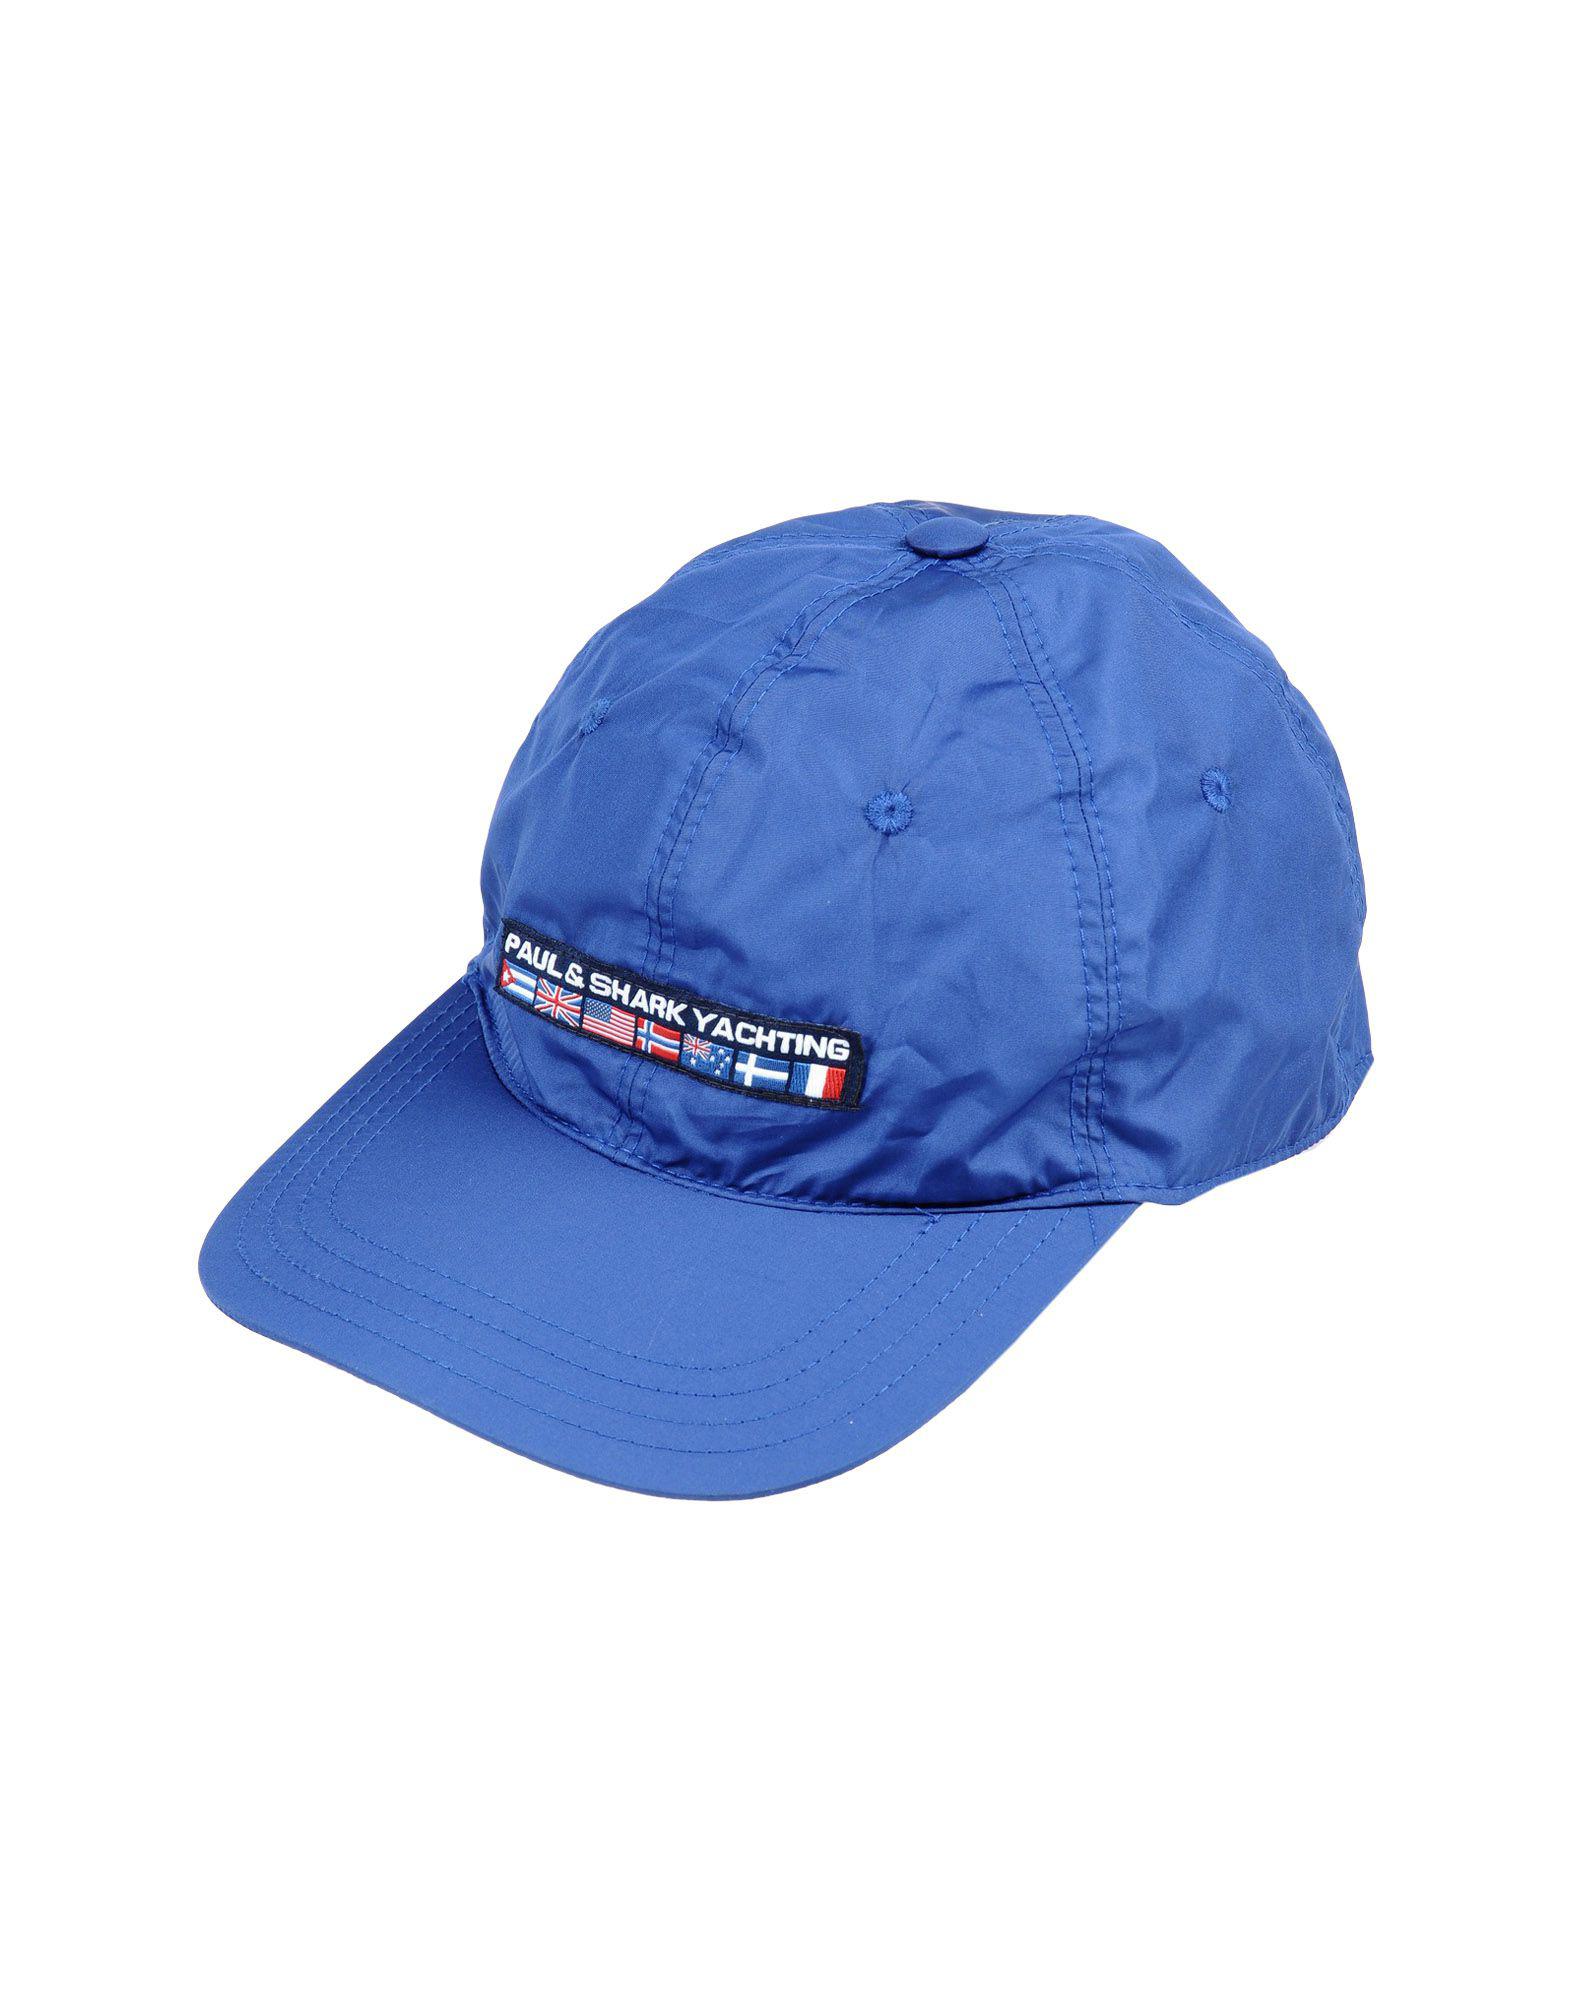 Paul & Shark Synthetic Hat in Blue for Men - Lyst